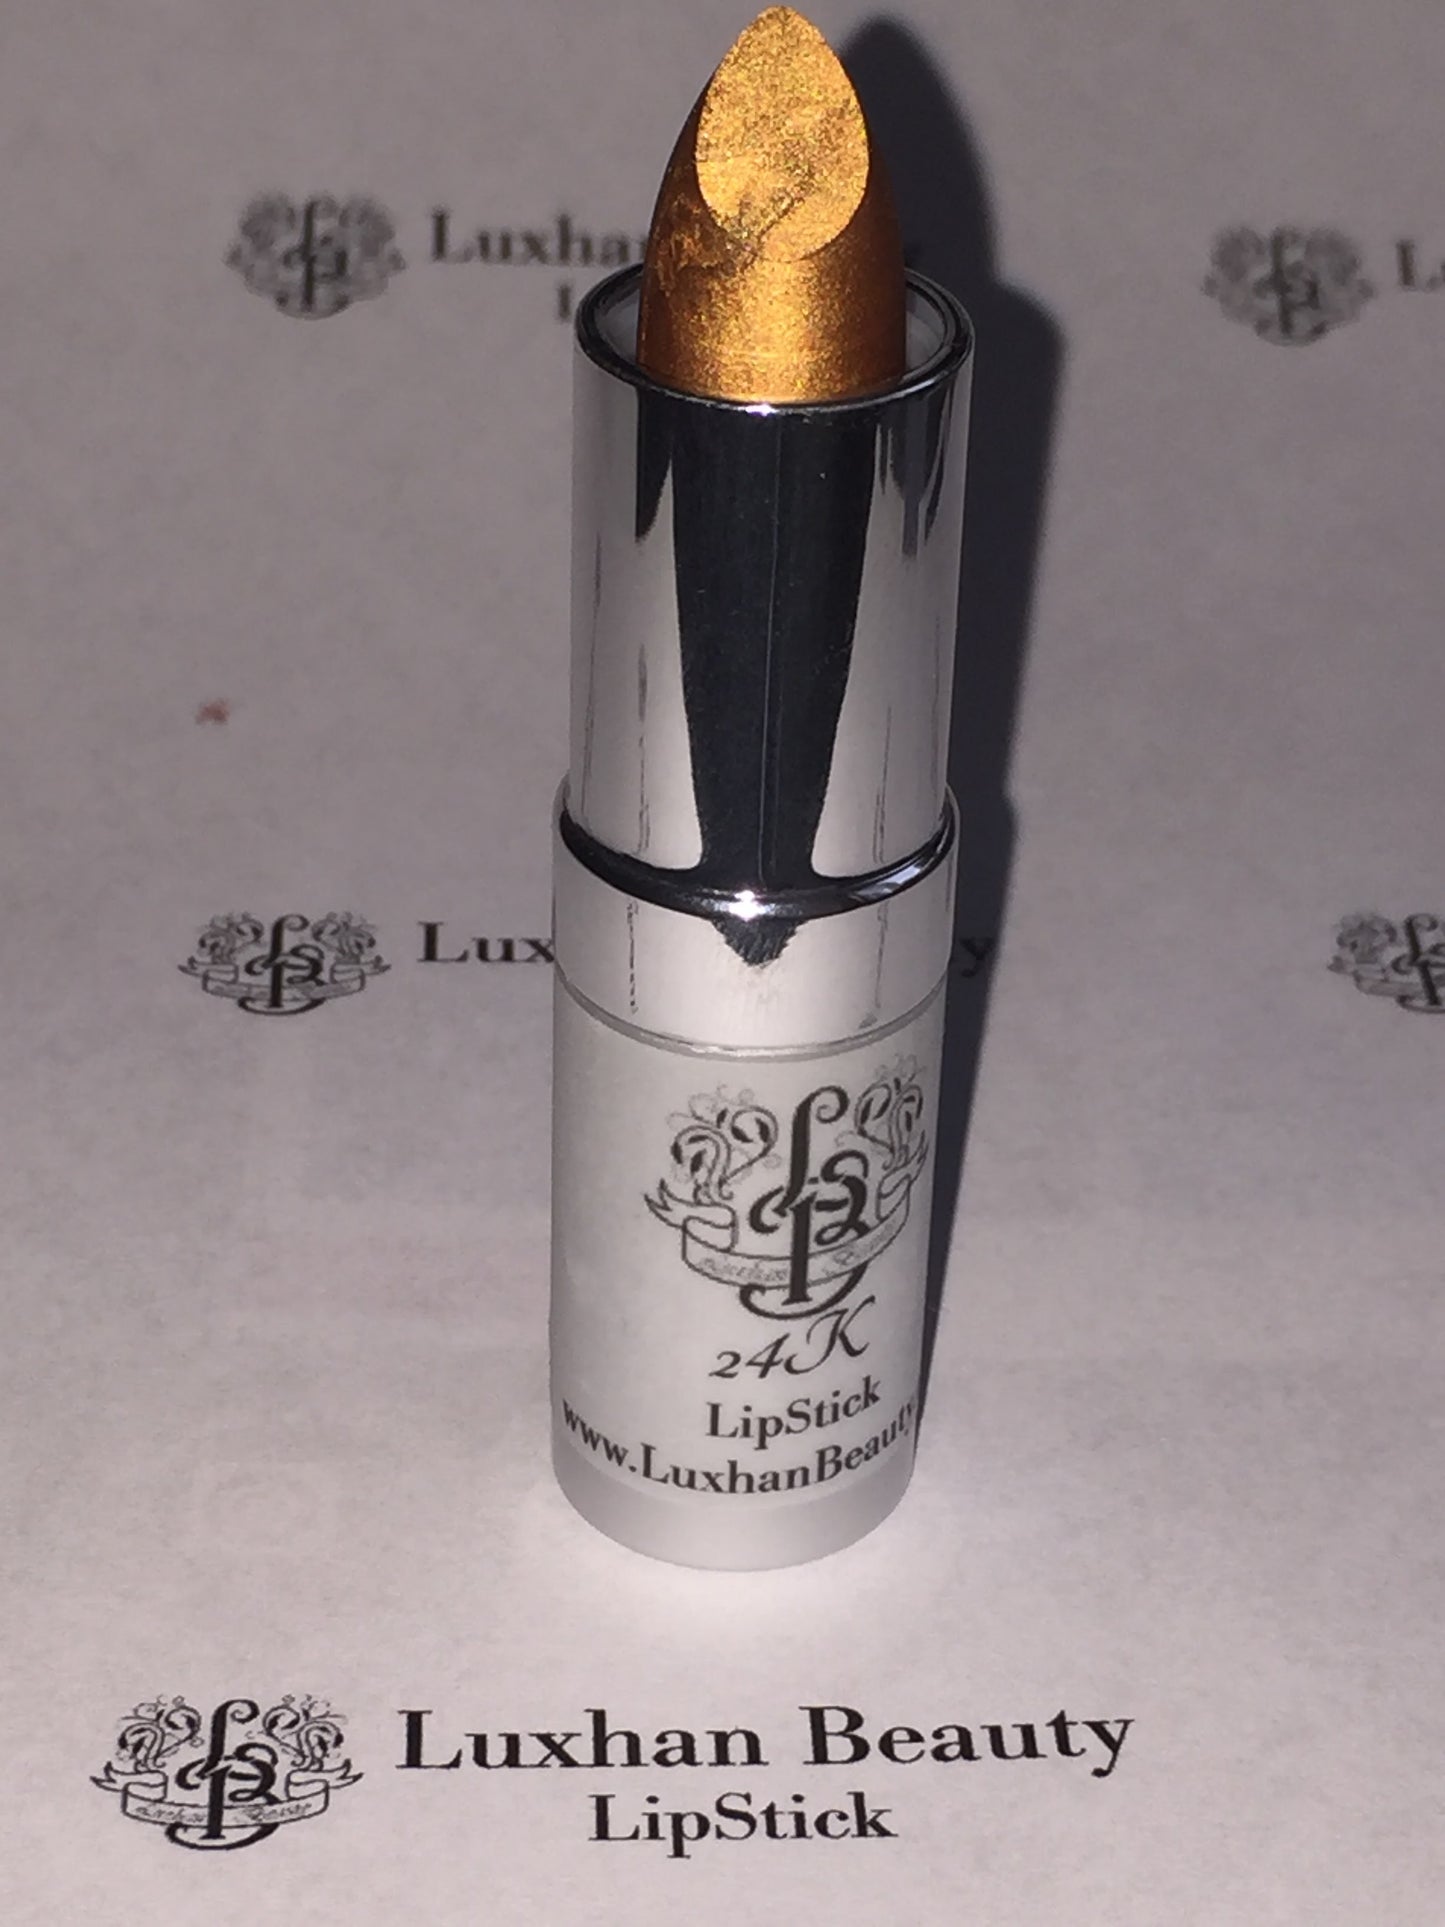 24K Gold, Luxhan Beauty Lipstick